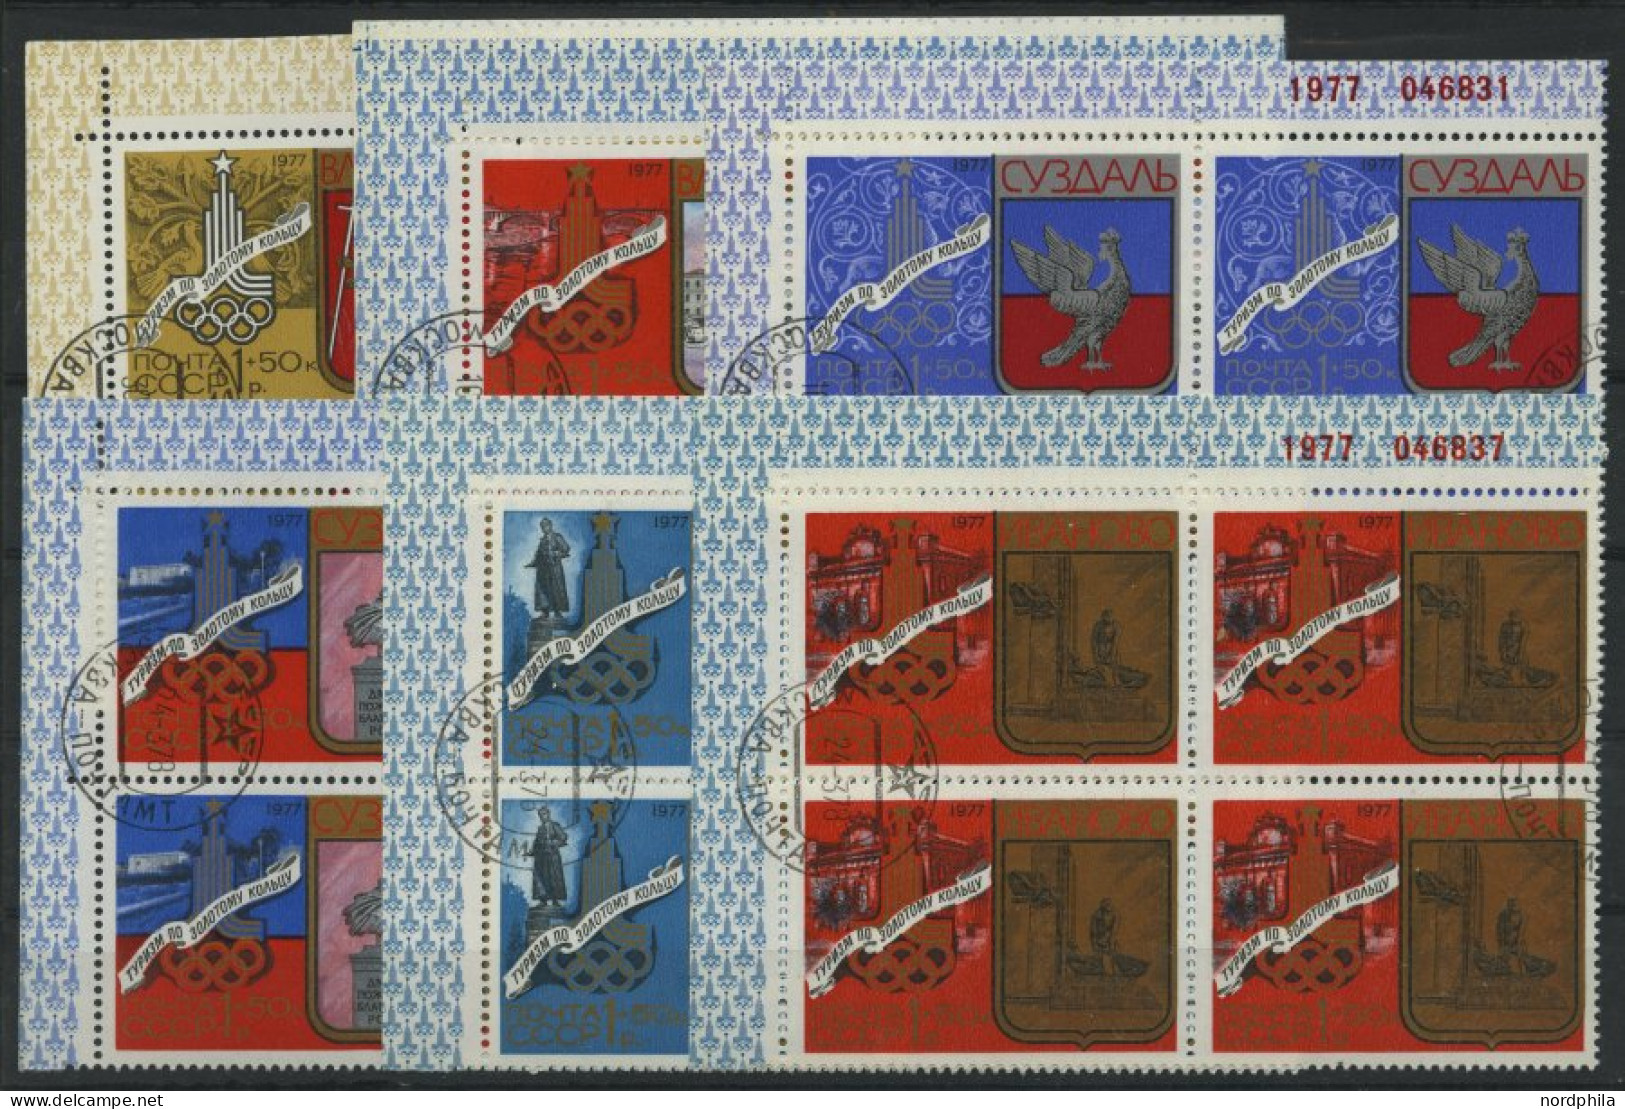 SOWJETUNION 4686-91 VB O, 1977, Olympische Sommerspiele Je In Eckrandviererblocks, Prachtsatz, Mi. (72.-) - Used Stamps